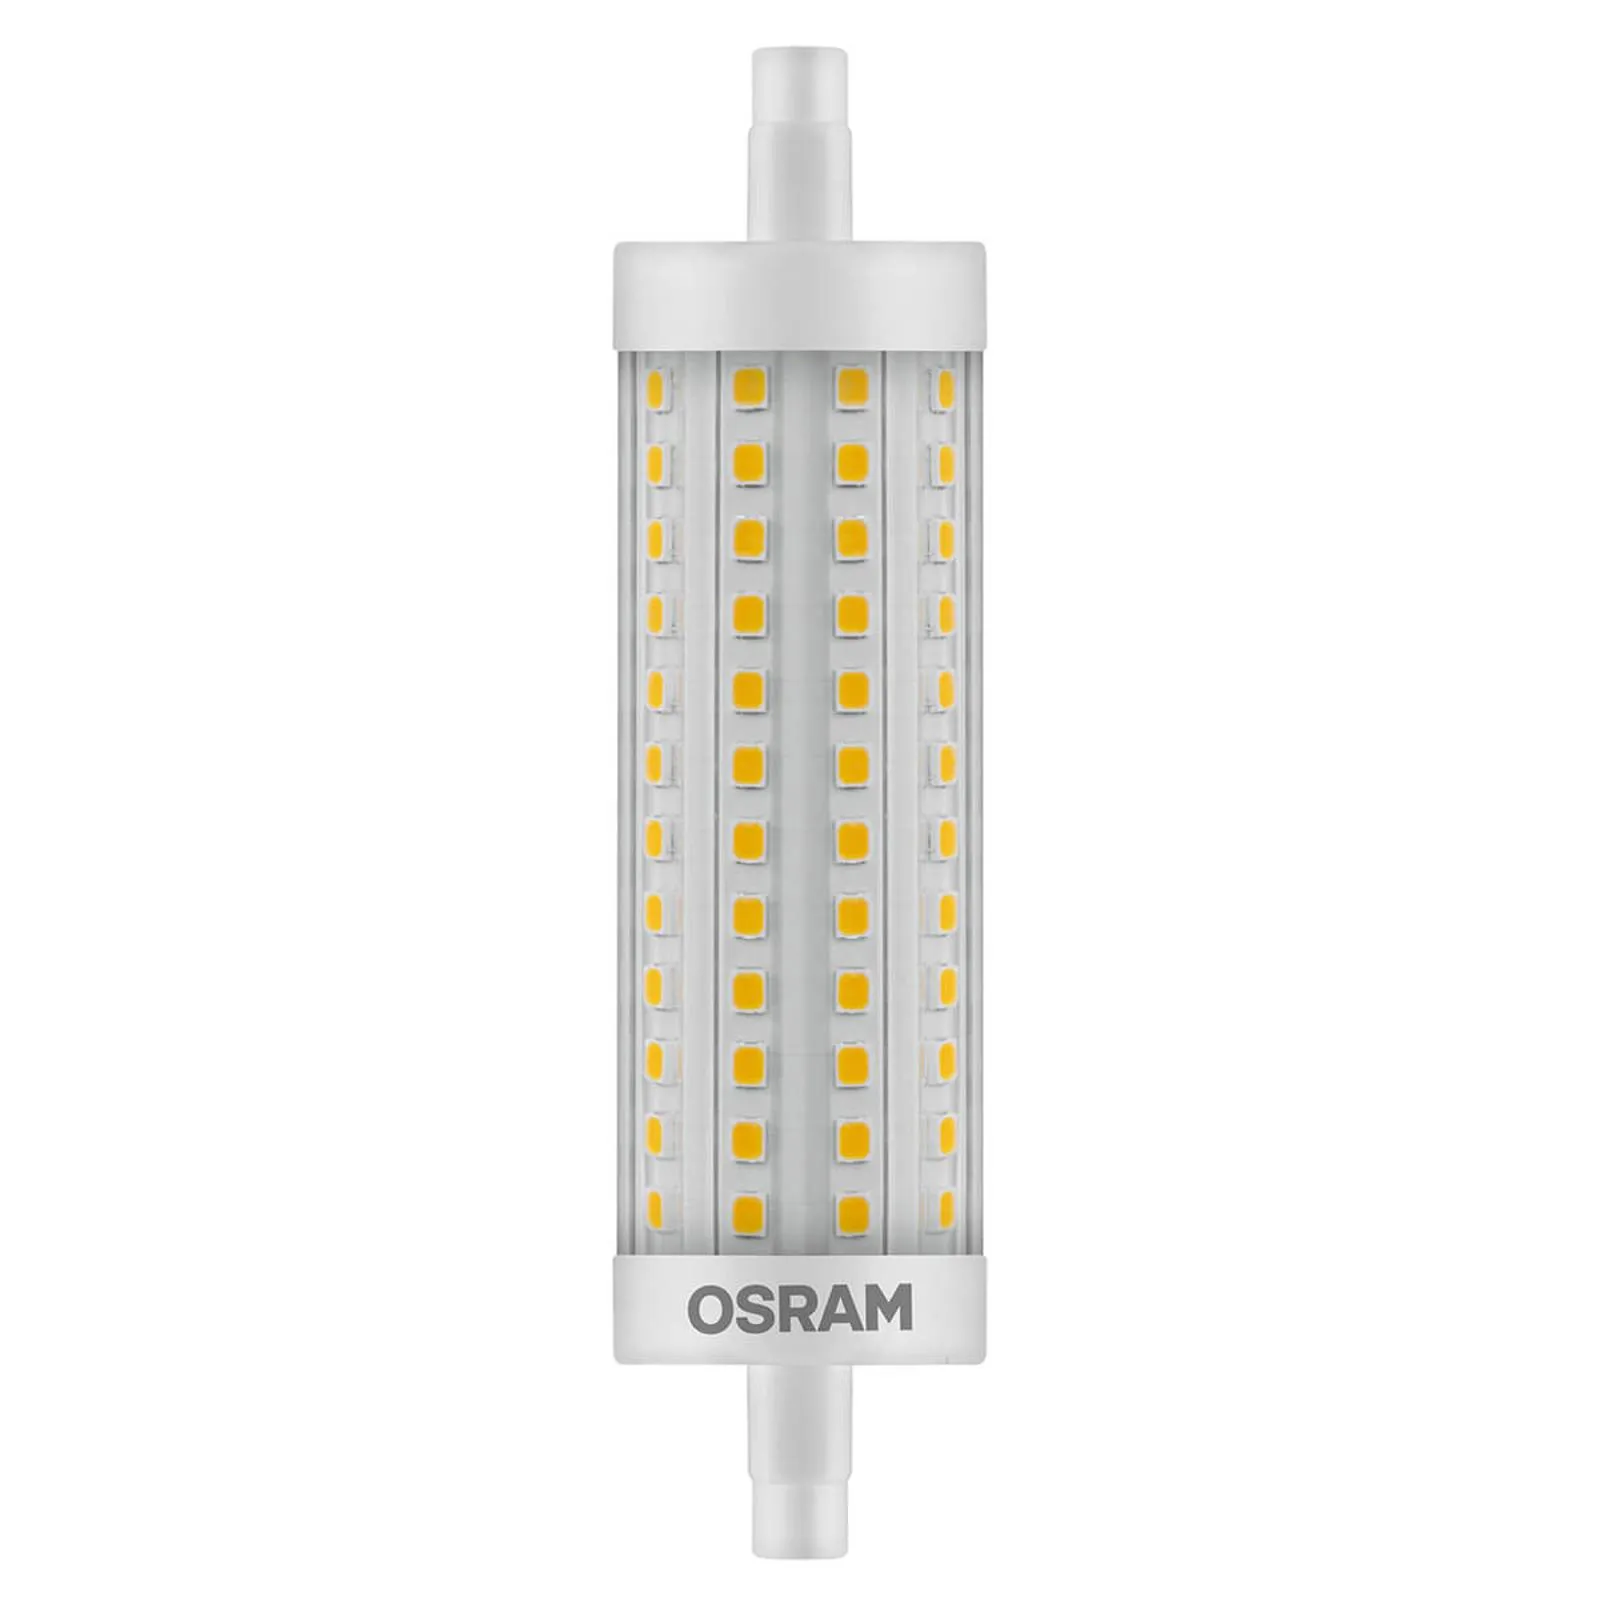 OSRAM tube LED bulb R7s 16 W warm white 2,000 lm